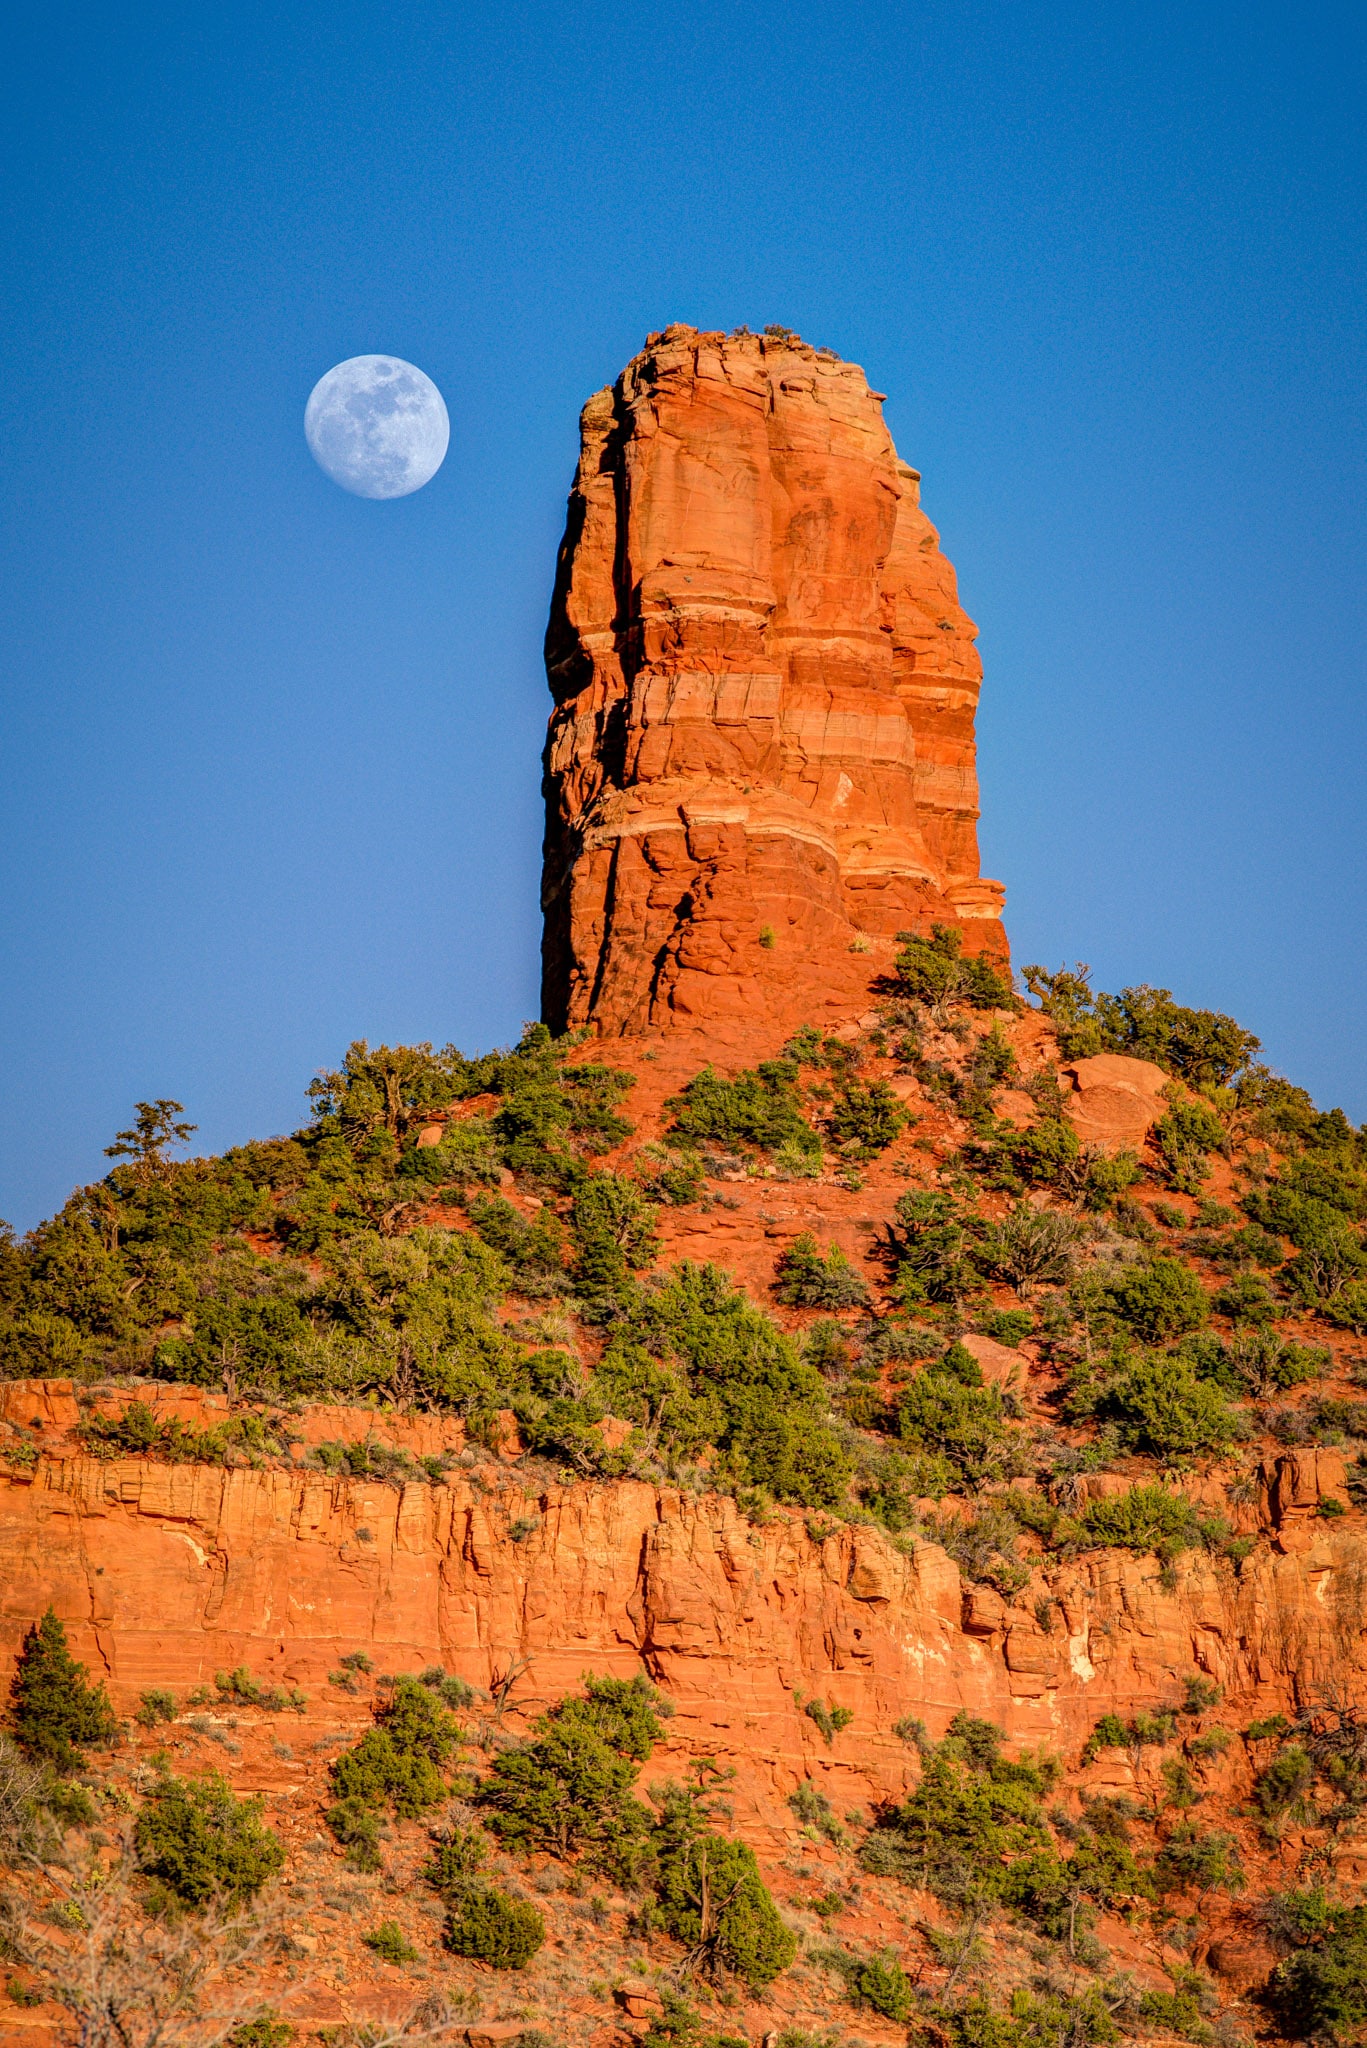 Moon rising over Chimney Rock as seen from Dry Creek Road in Sedona, Arizona.